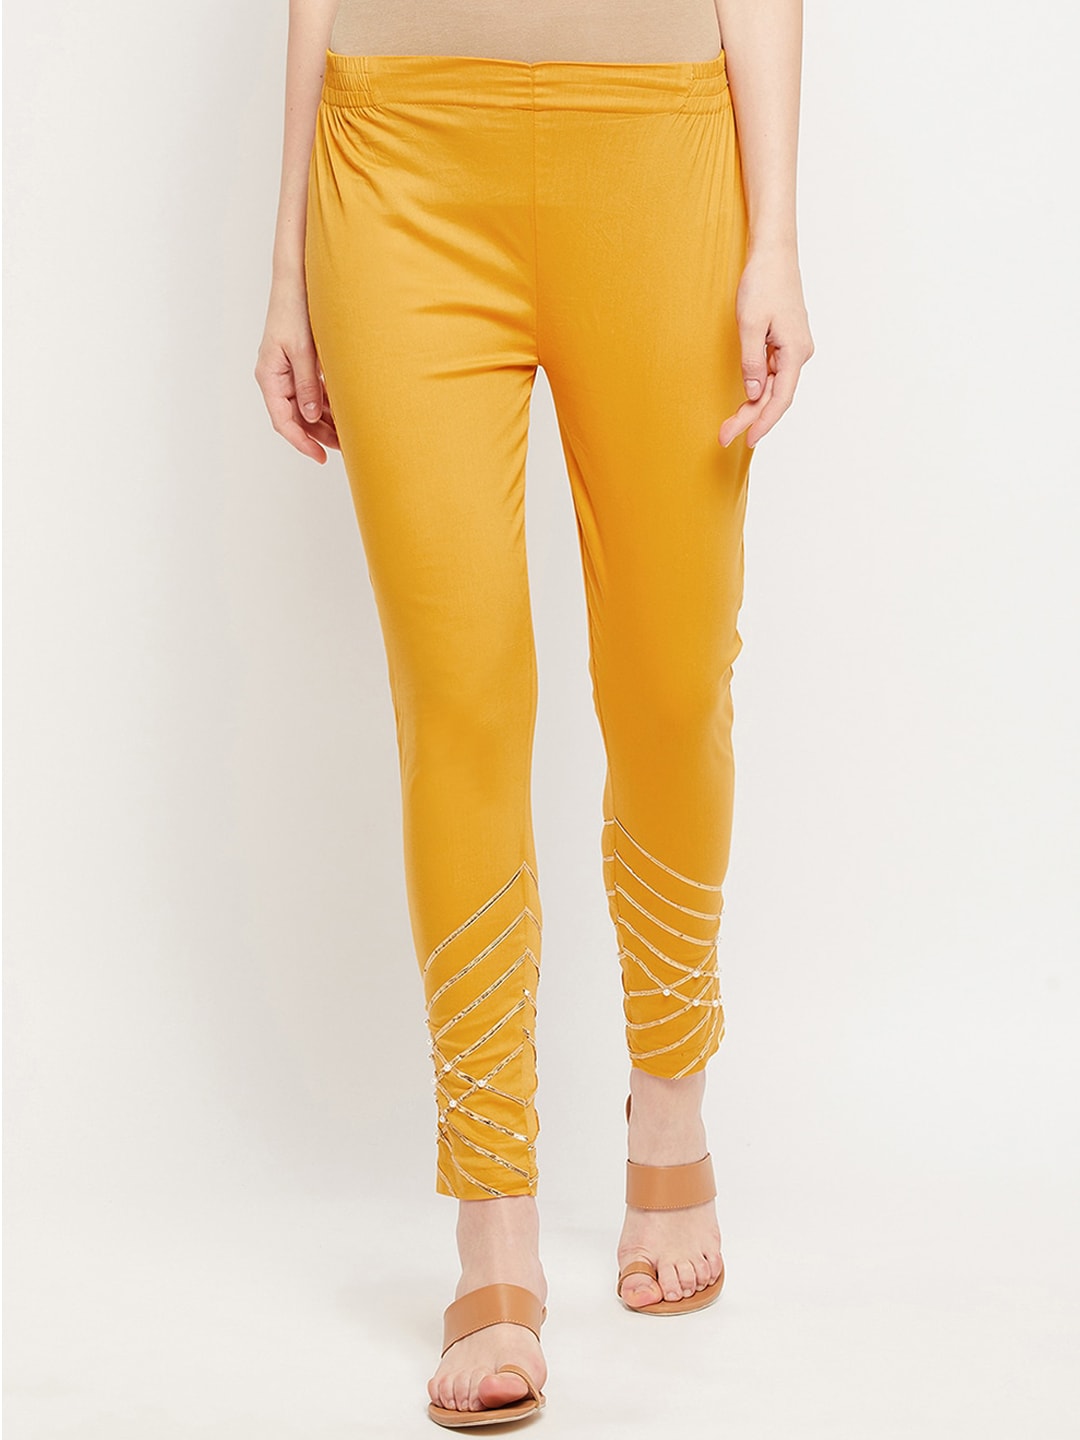 Clora Creation Women Mustard Yellow Smart Trousers Price in India